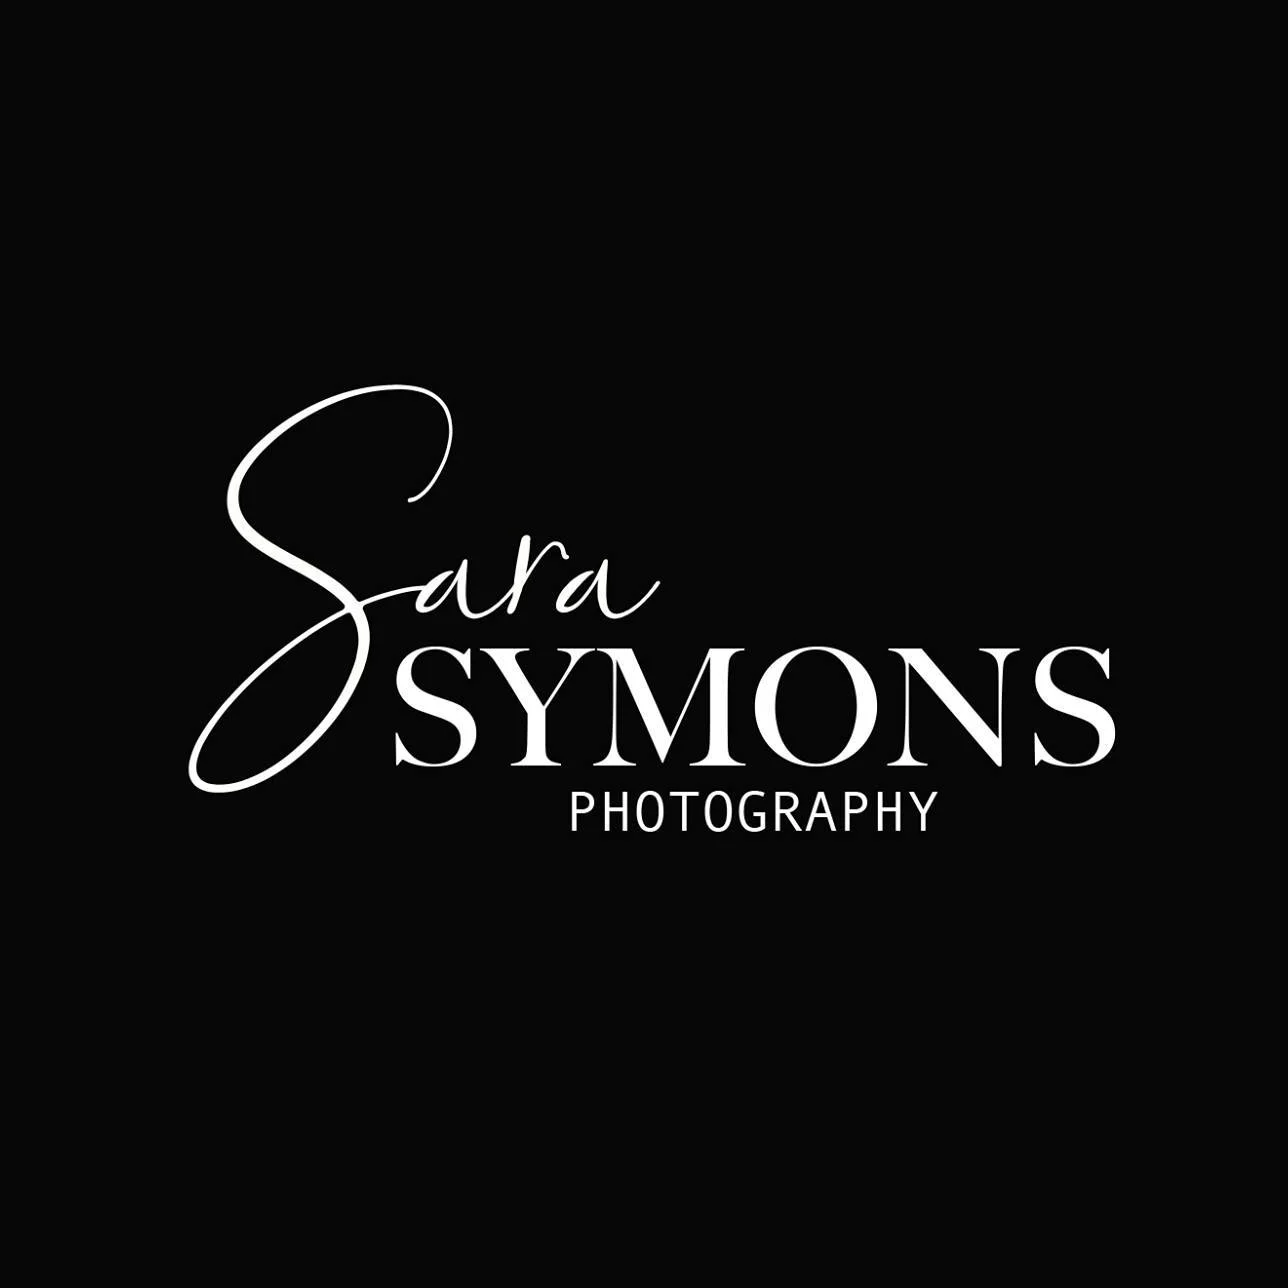 Sara Symons Photography